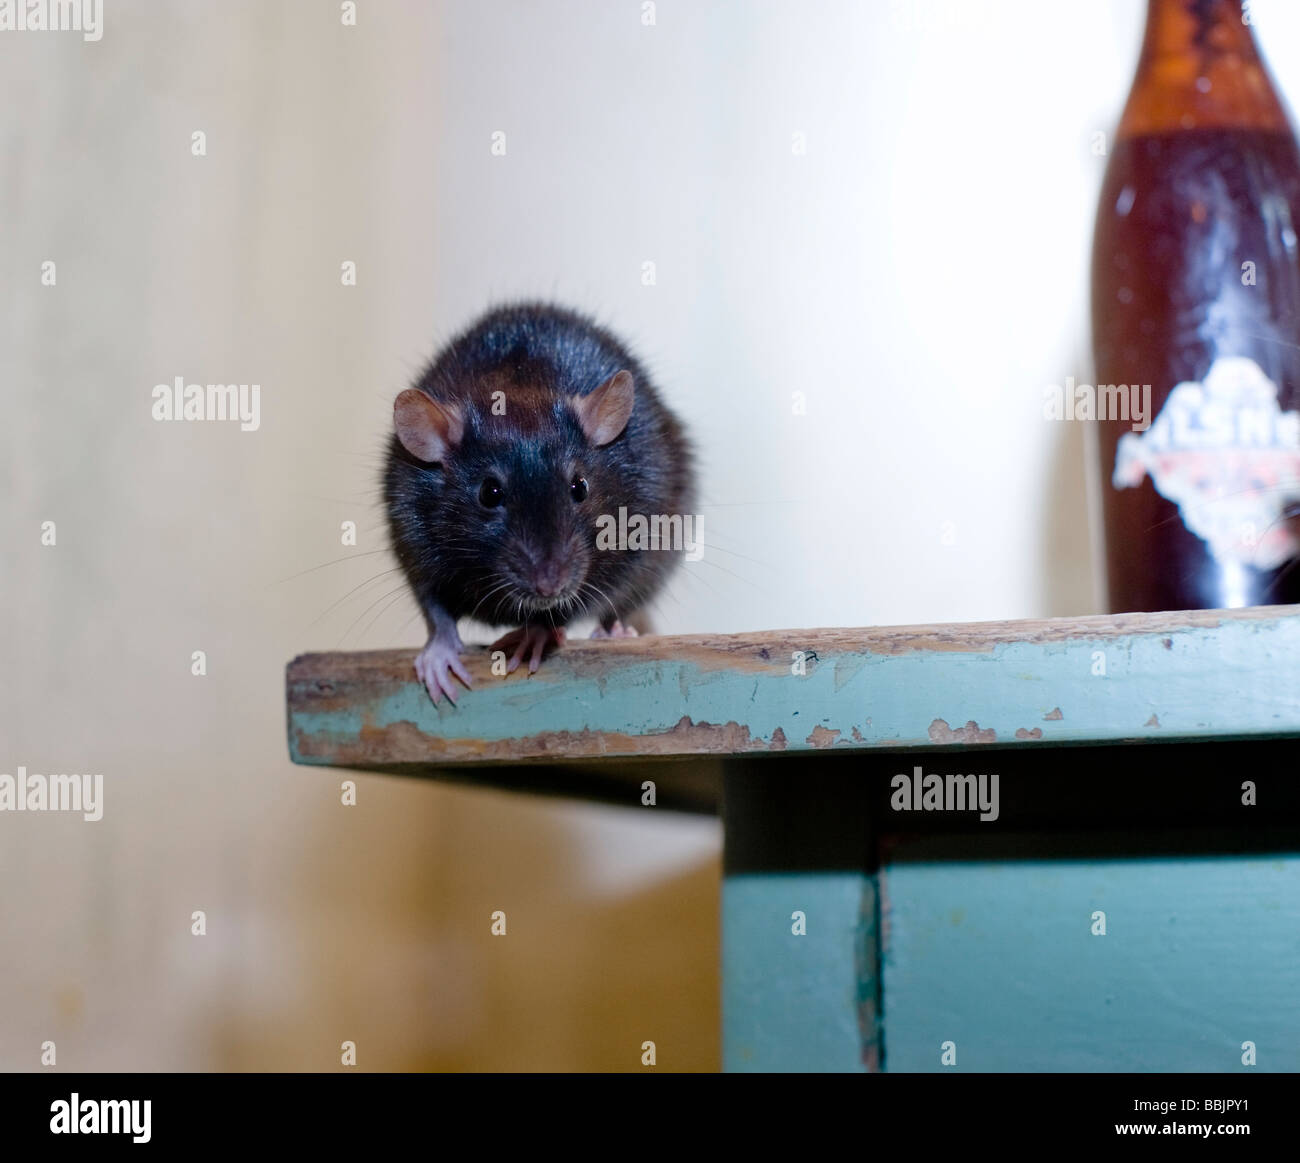 Svartråtta, rat noir (Rattus rattus) Banque D'Images